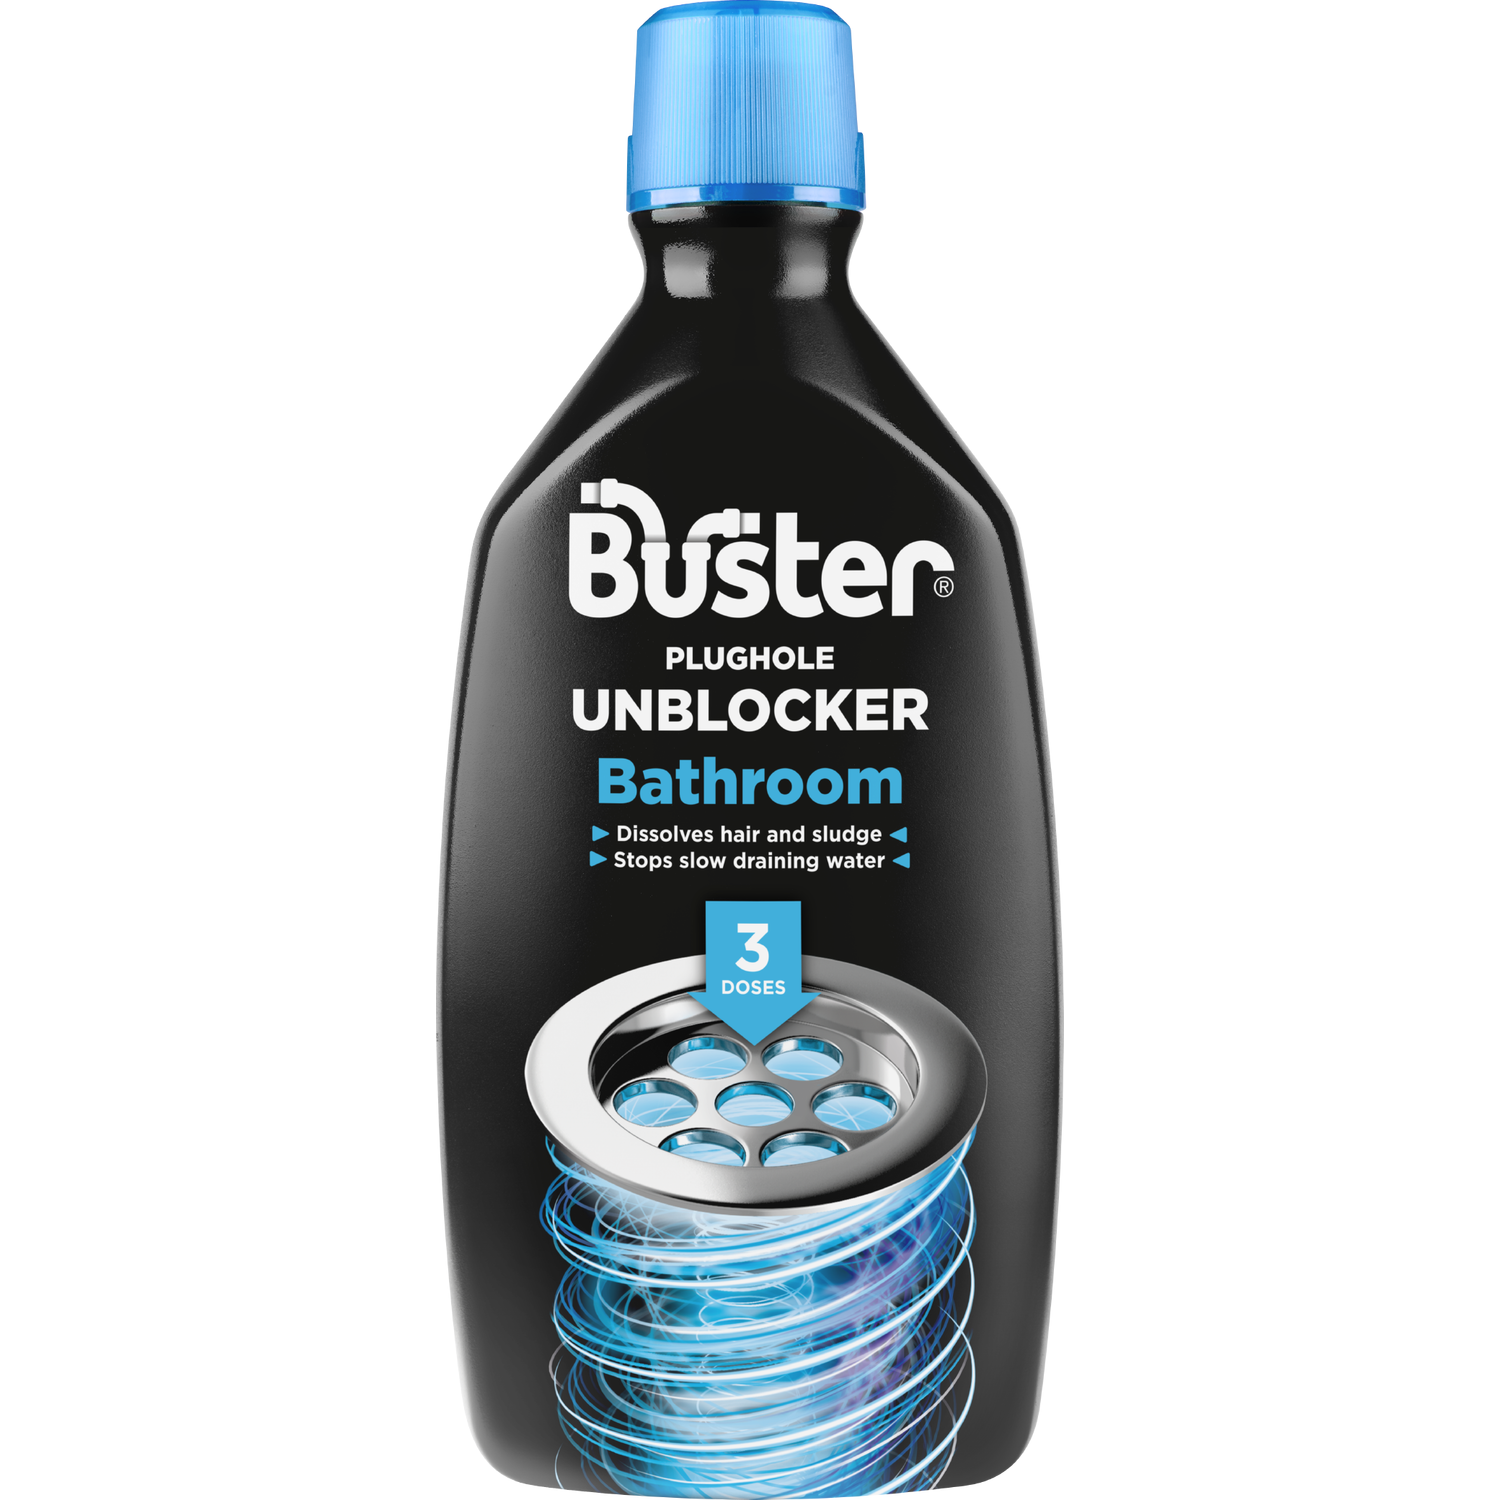 Buster Bathroom Plughole Unblocker 1L Image